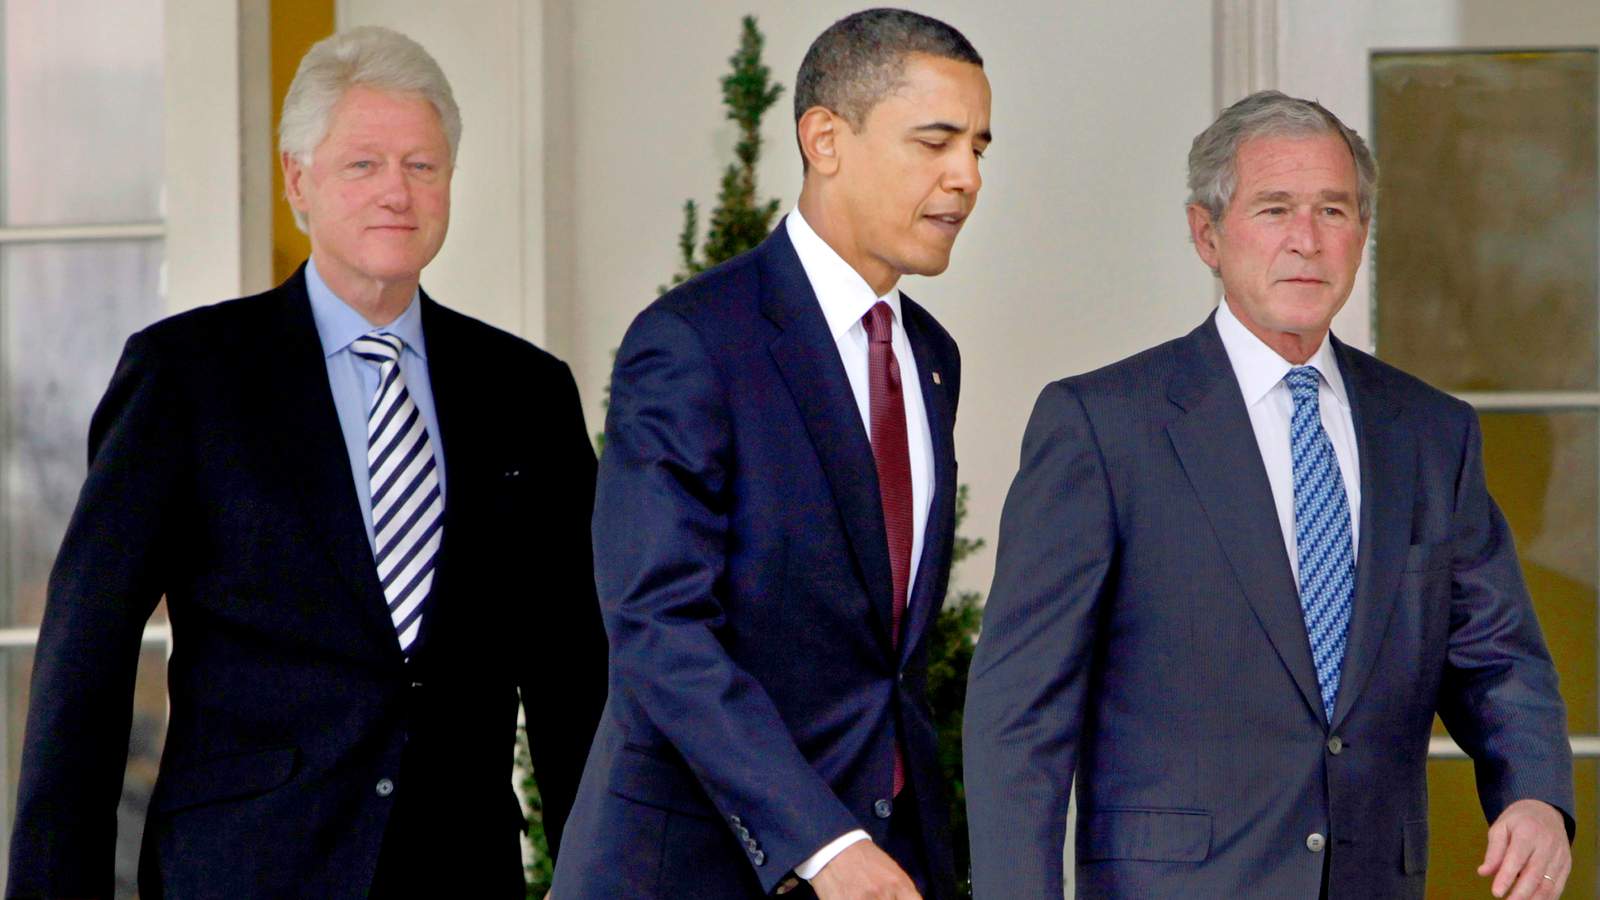 Obama, Bush, Clinton willing to get the coronavirus vaccine on camera